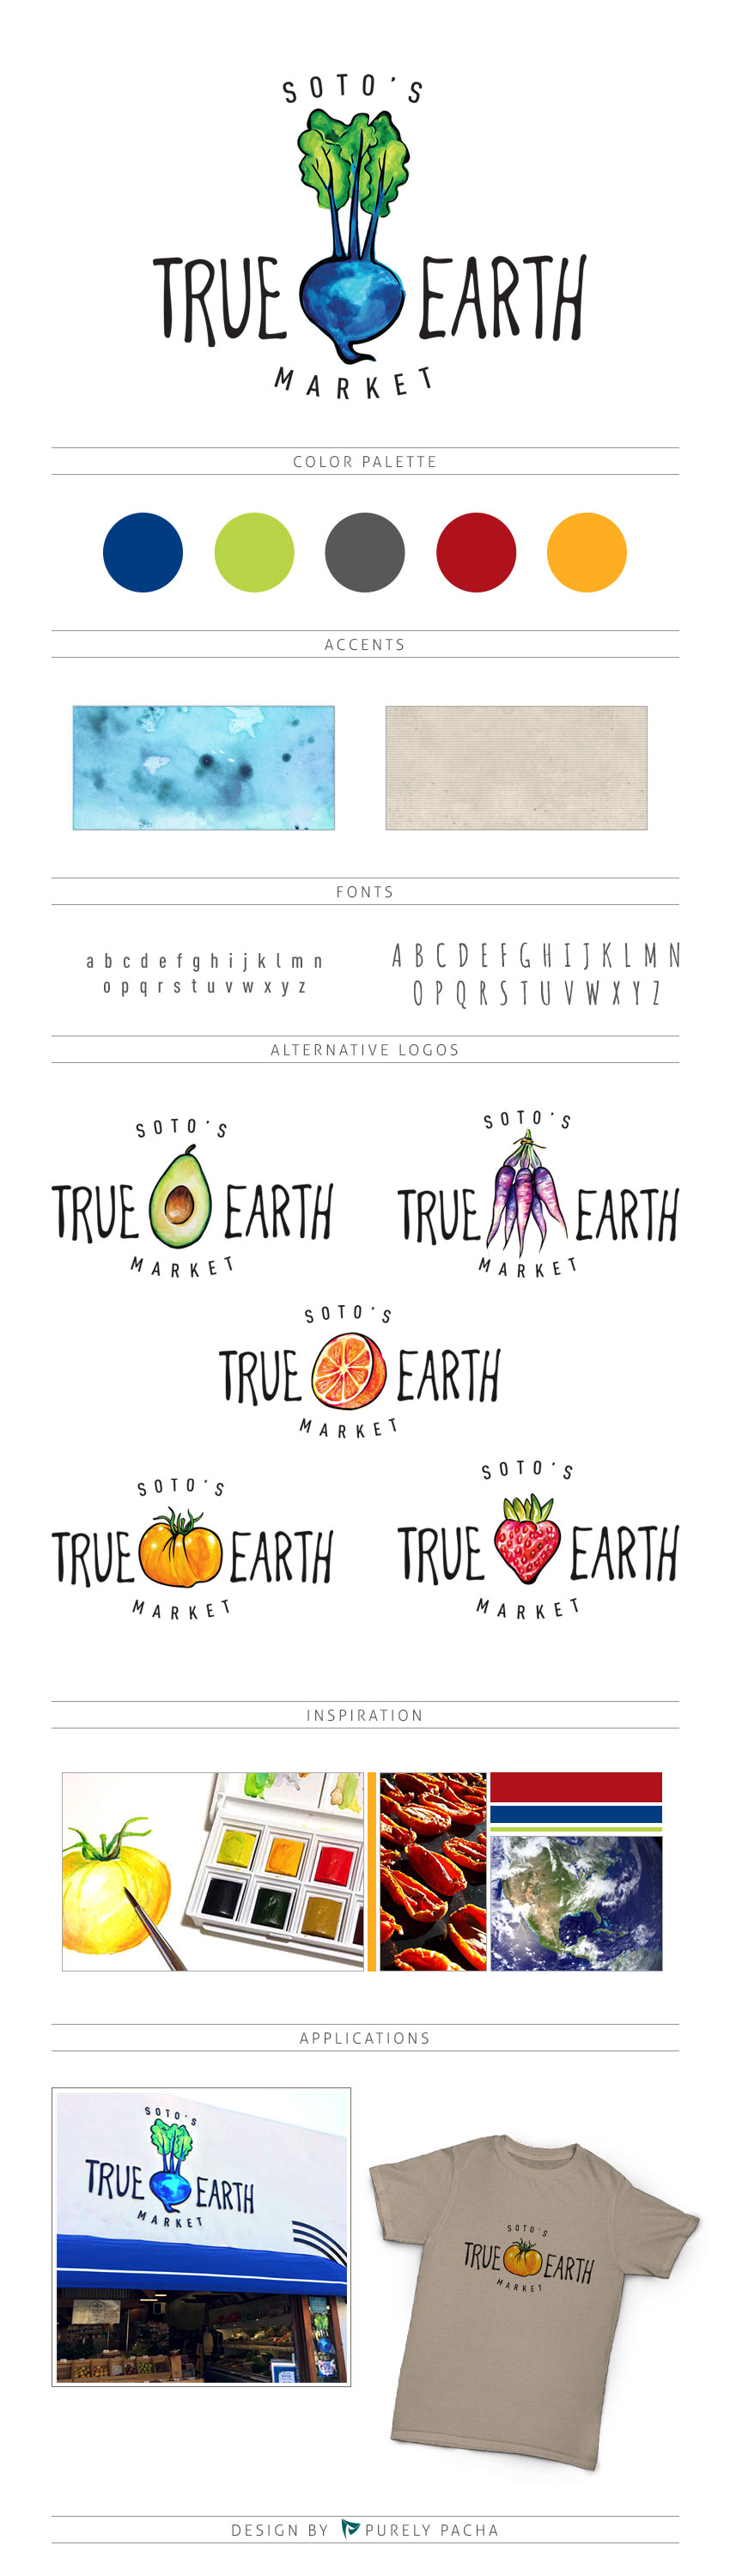 True Earth Market - Logo and Identity Design